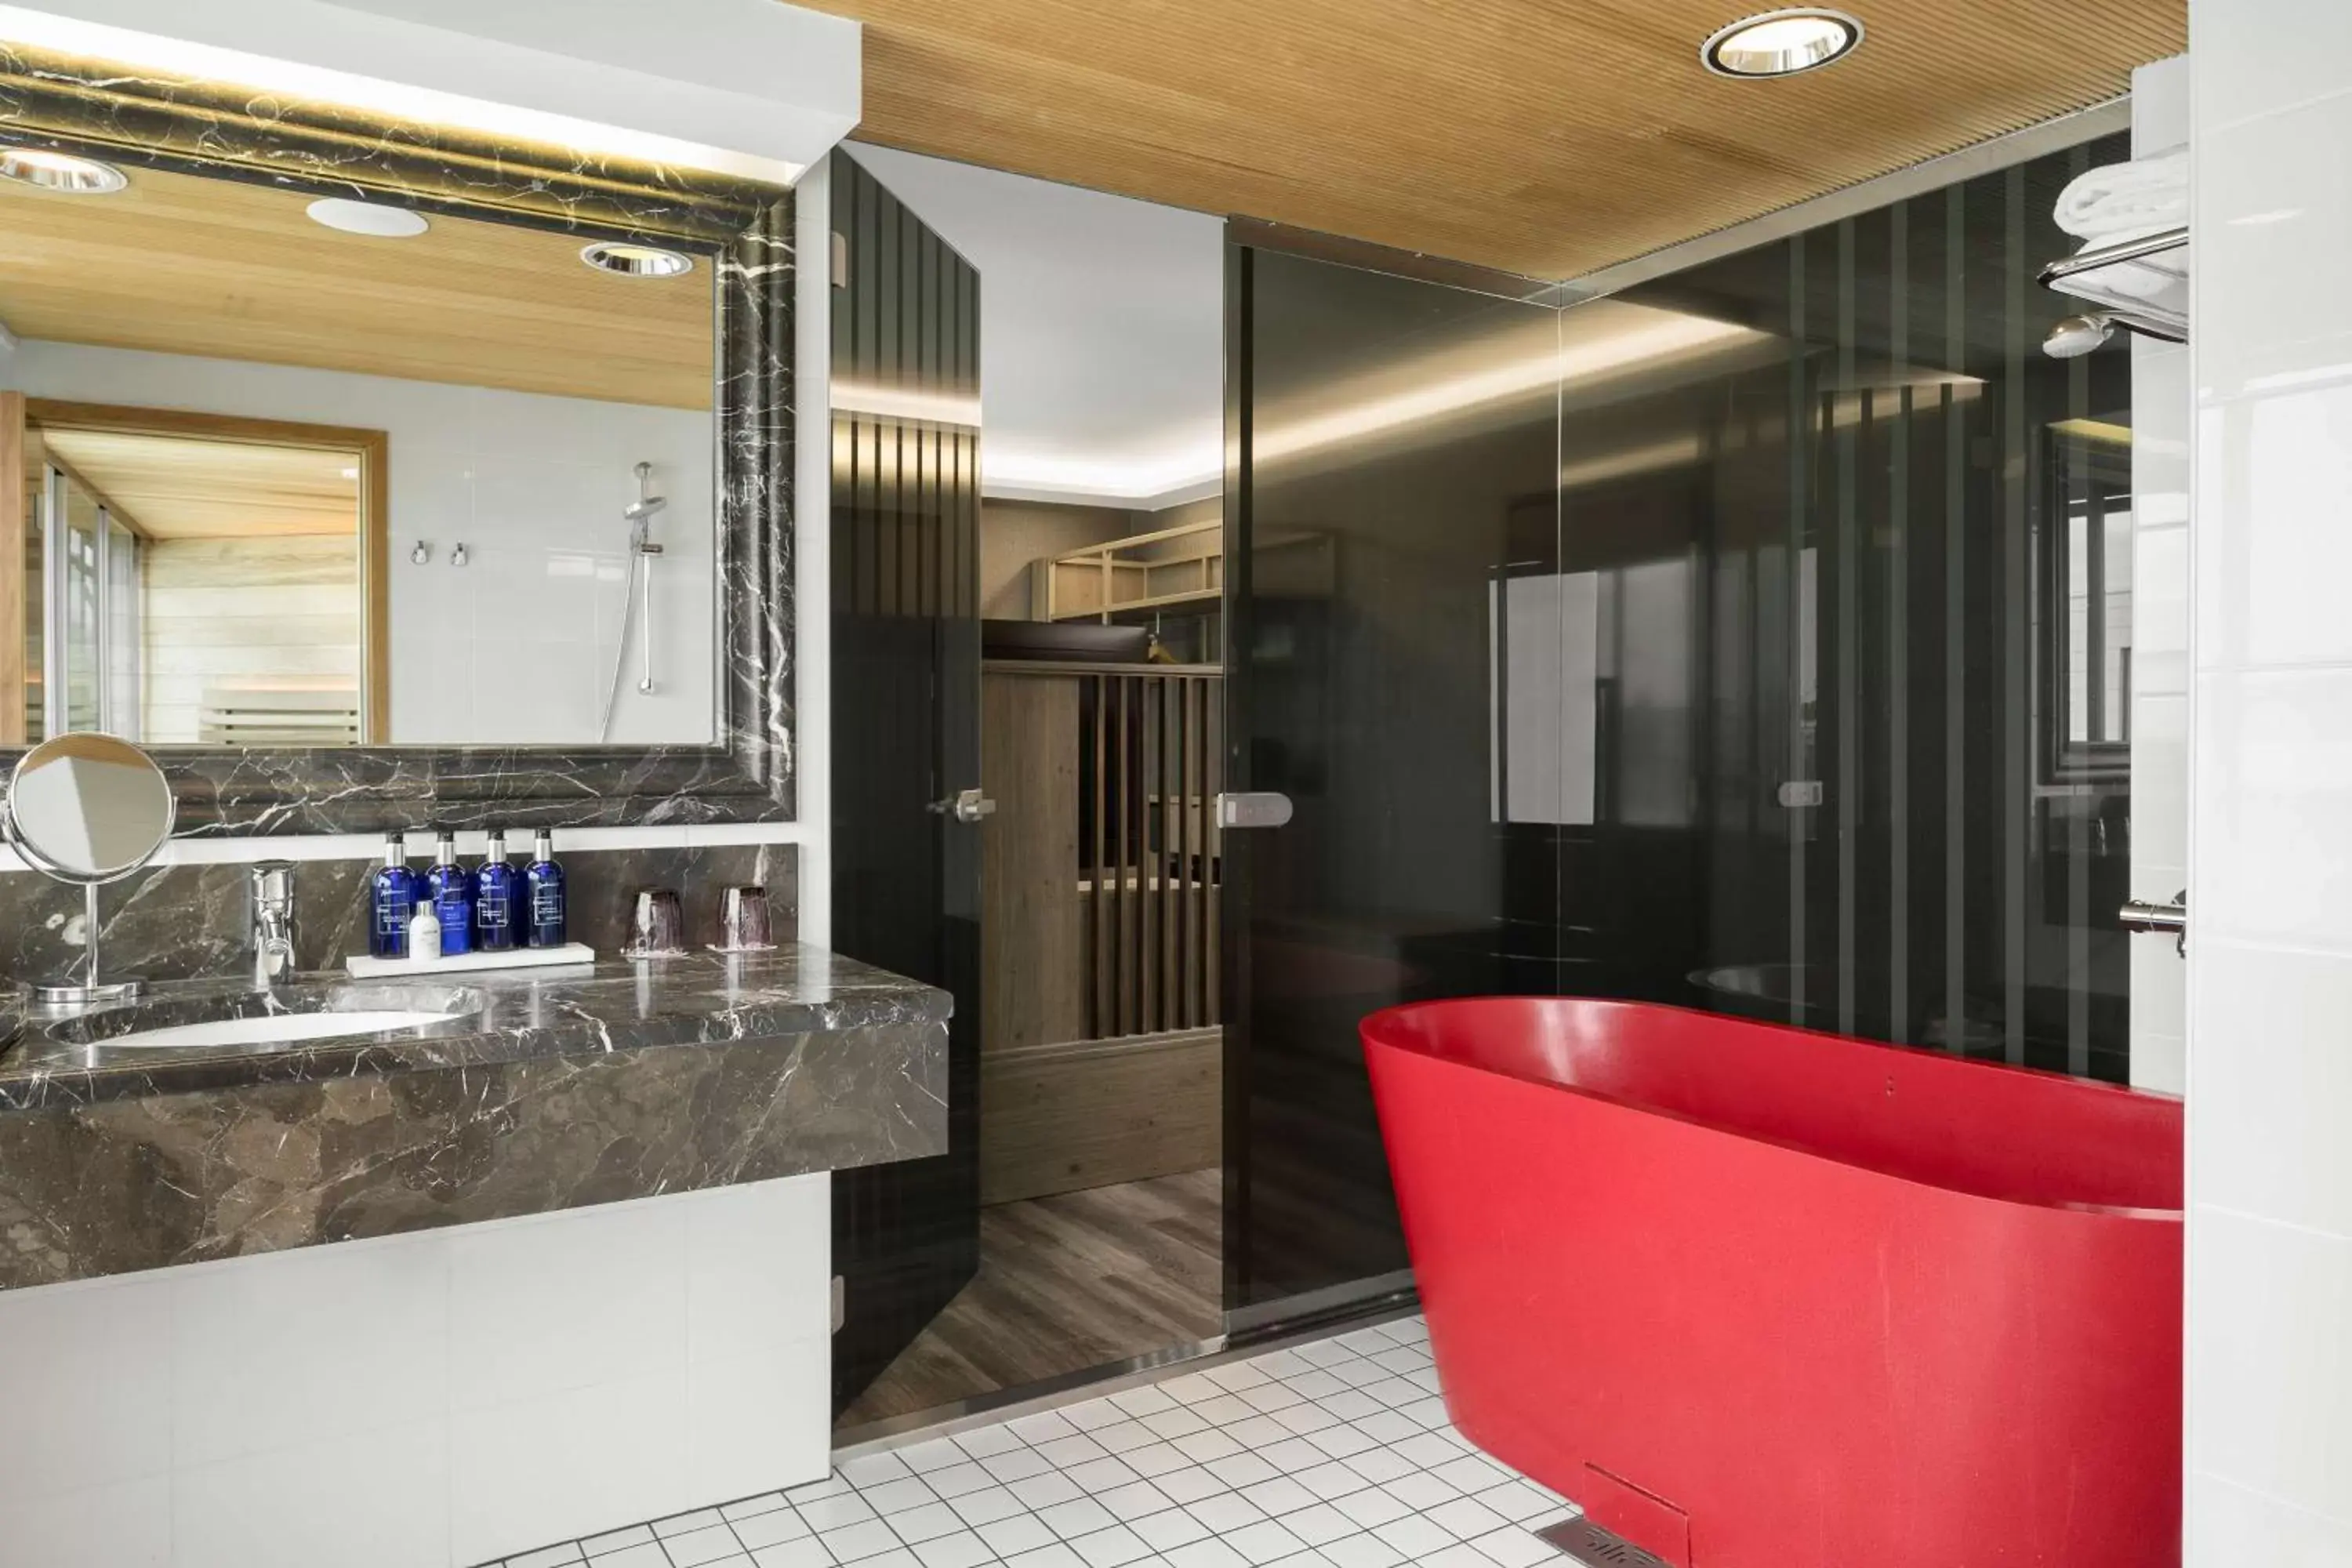 Photo of the whole room, Bathroom in Radisson Blu Marina Palace Hotel, Turku